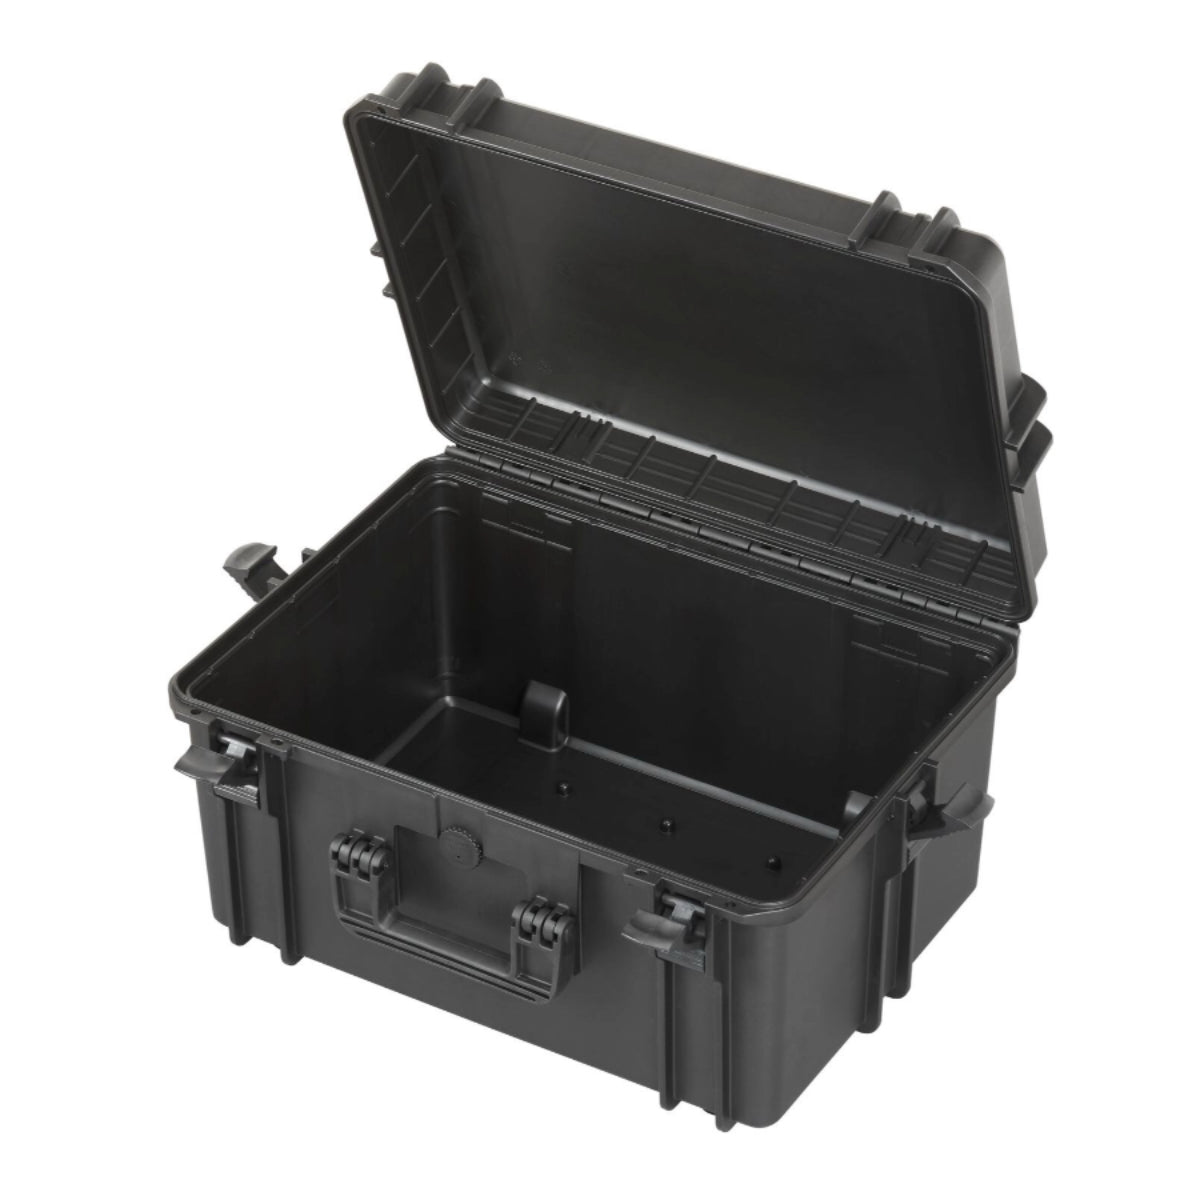 SP PRO 505H280 Black Carry Case, Empty w/ Convoluted Foam in Lid, ID: L500xW350xH280mm